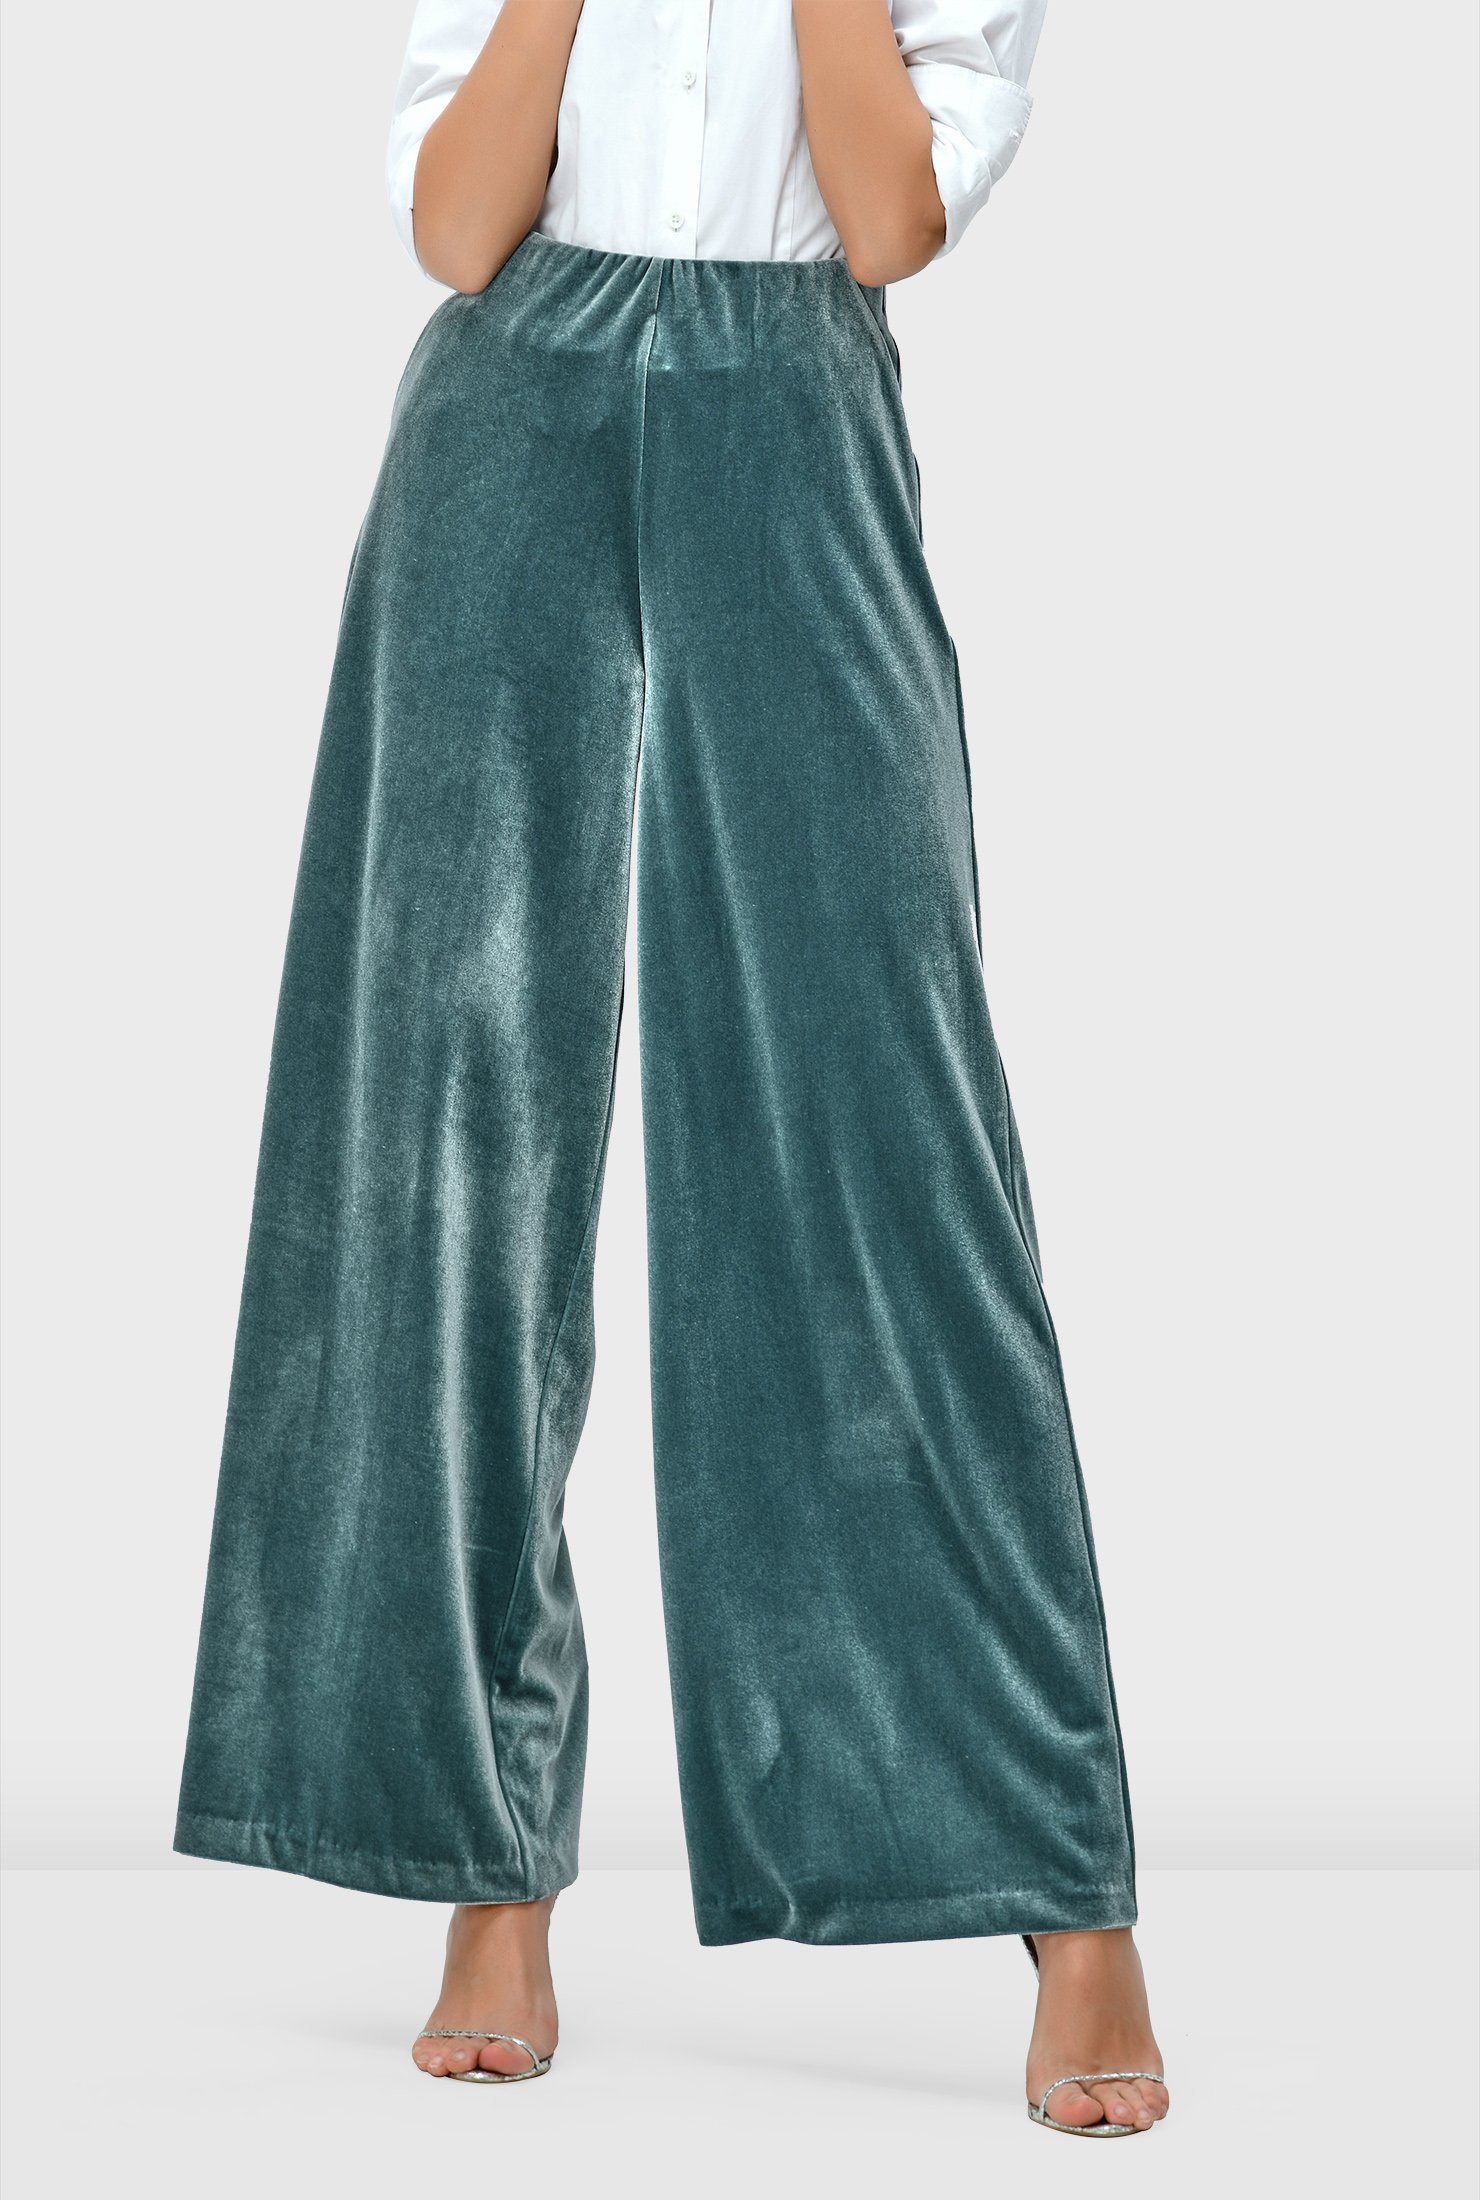 Women's New High Waist Elastic Bow Printed Velvet Casual Pants Sweatpa –  KesleyBoutique